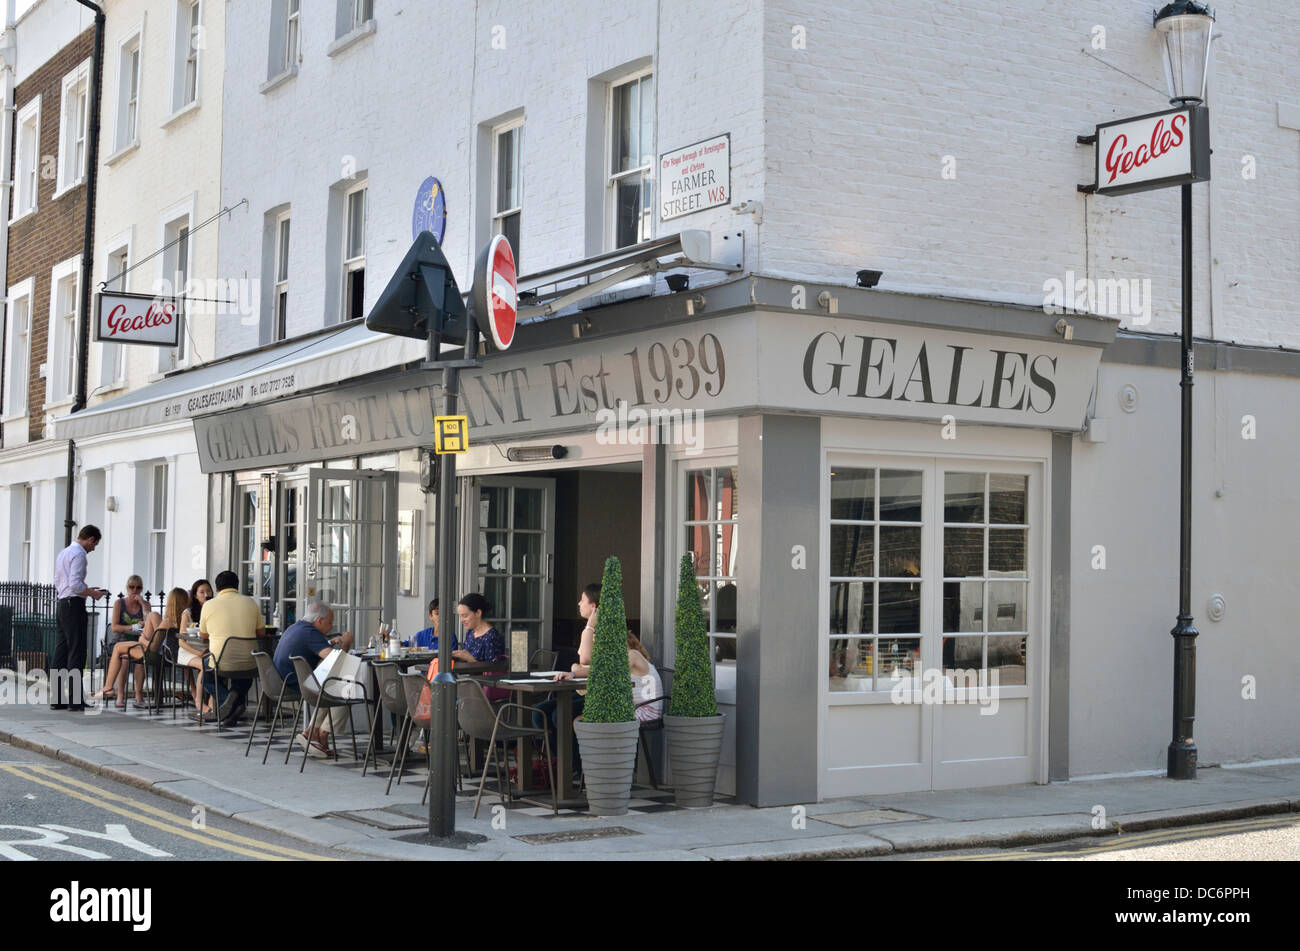 Geales Fish Restaurant in Farmer Street, Notting Hill, London, UK. Stock Photo